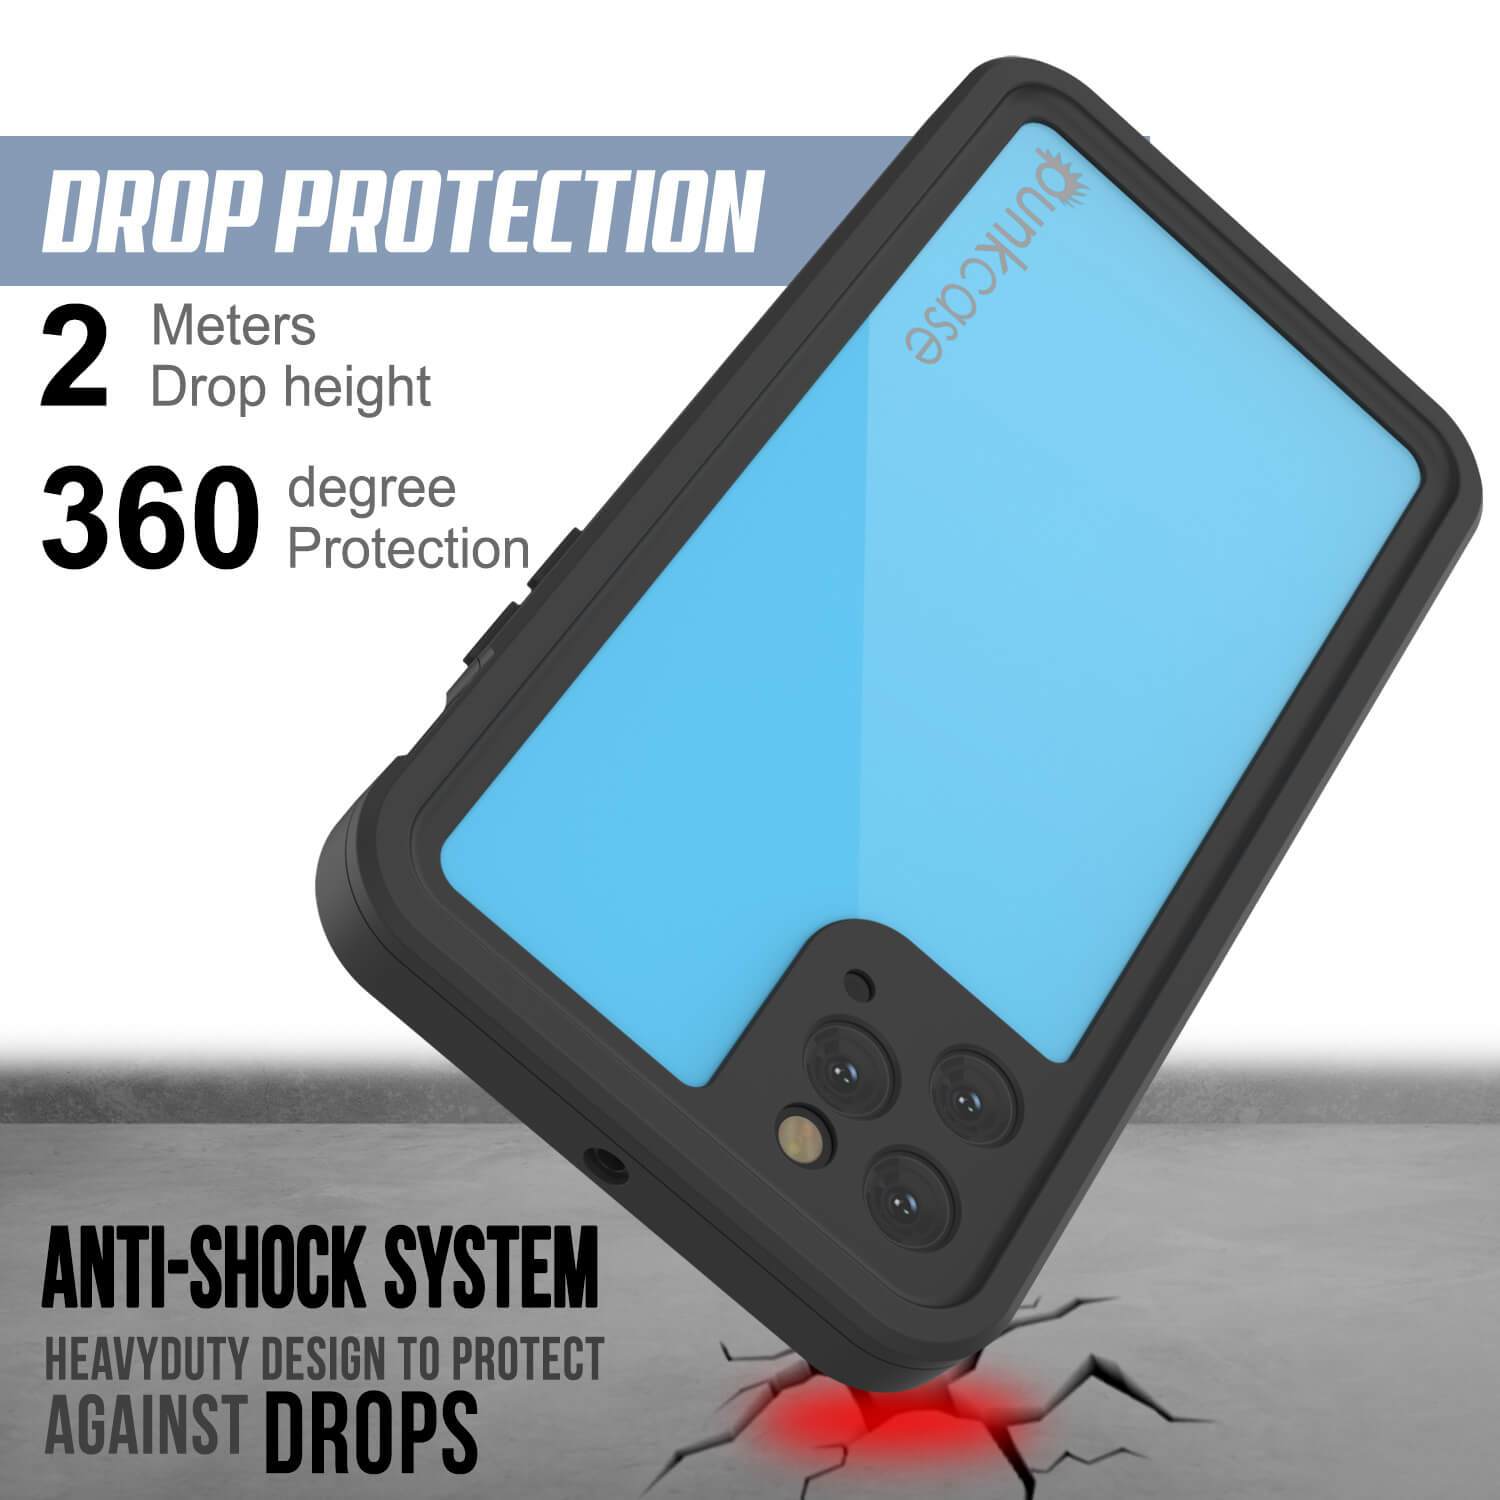 iPhone 11 Pro Max Waterproof IP68 Case, Punkcase [Light blue] [StudStar Series] [Slim Fit] [Dirtproof]